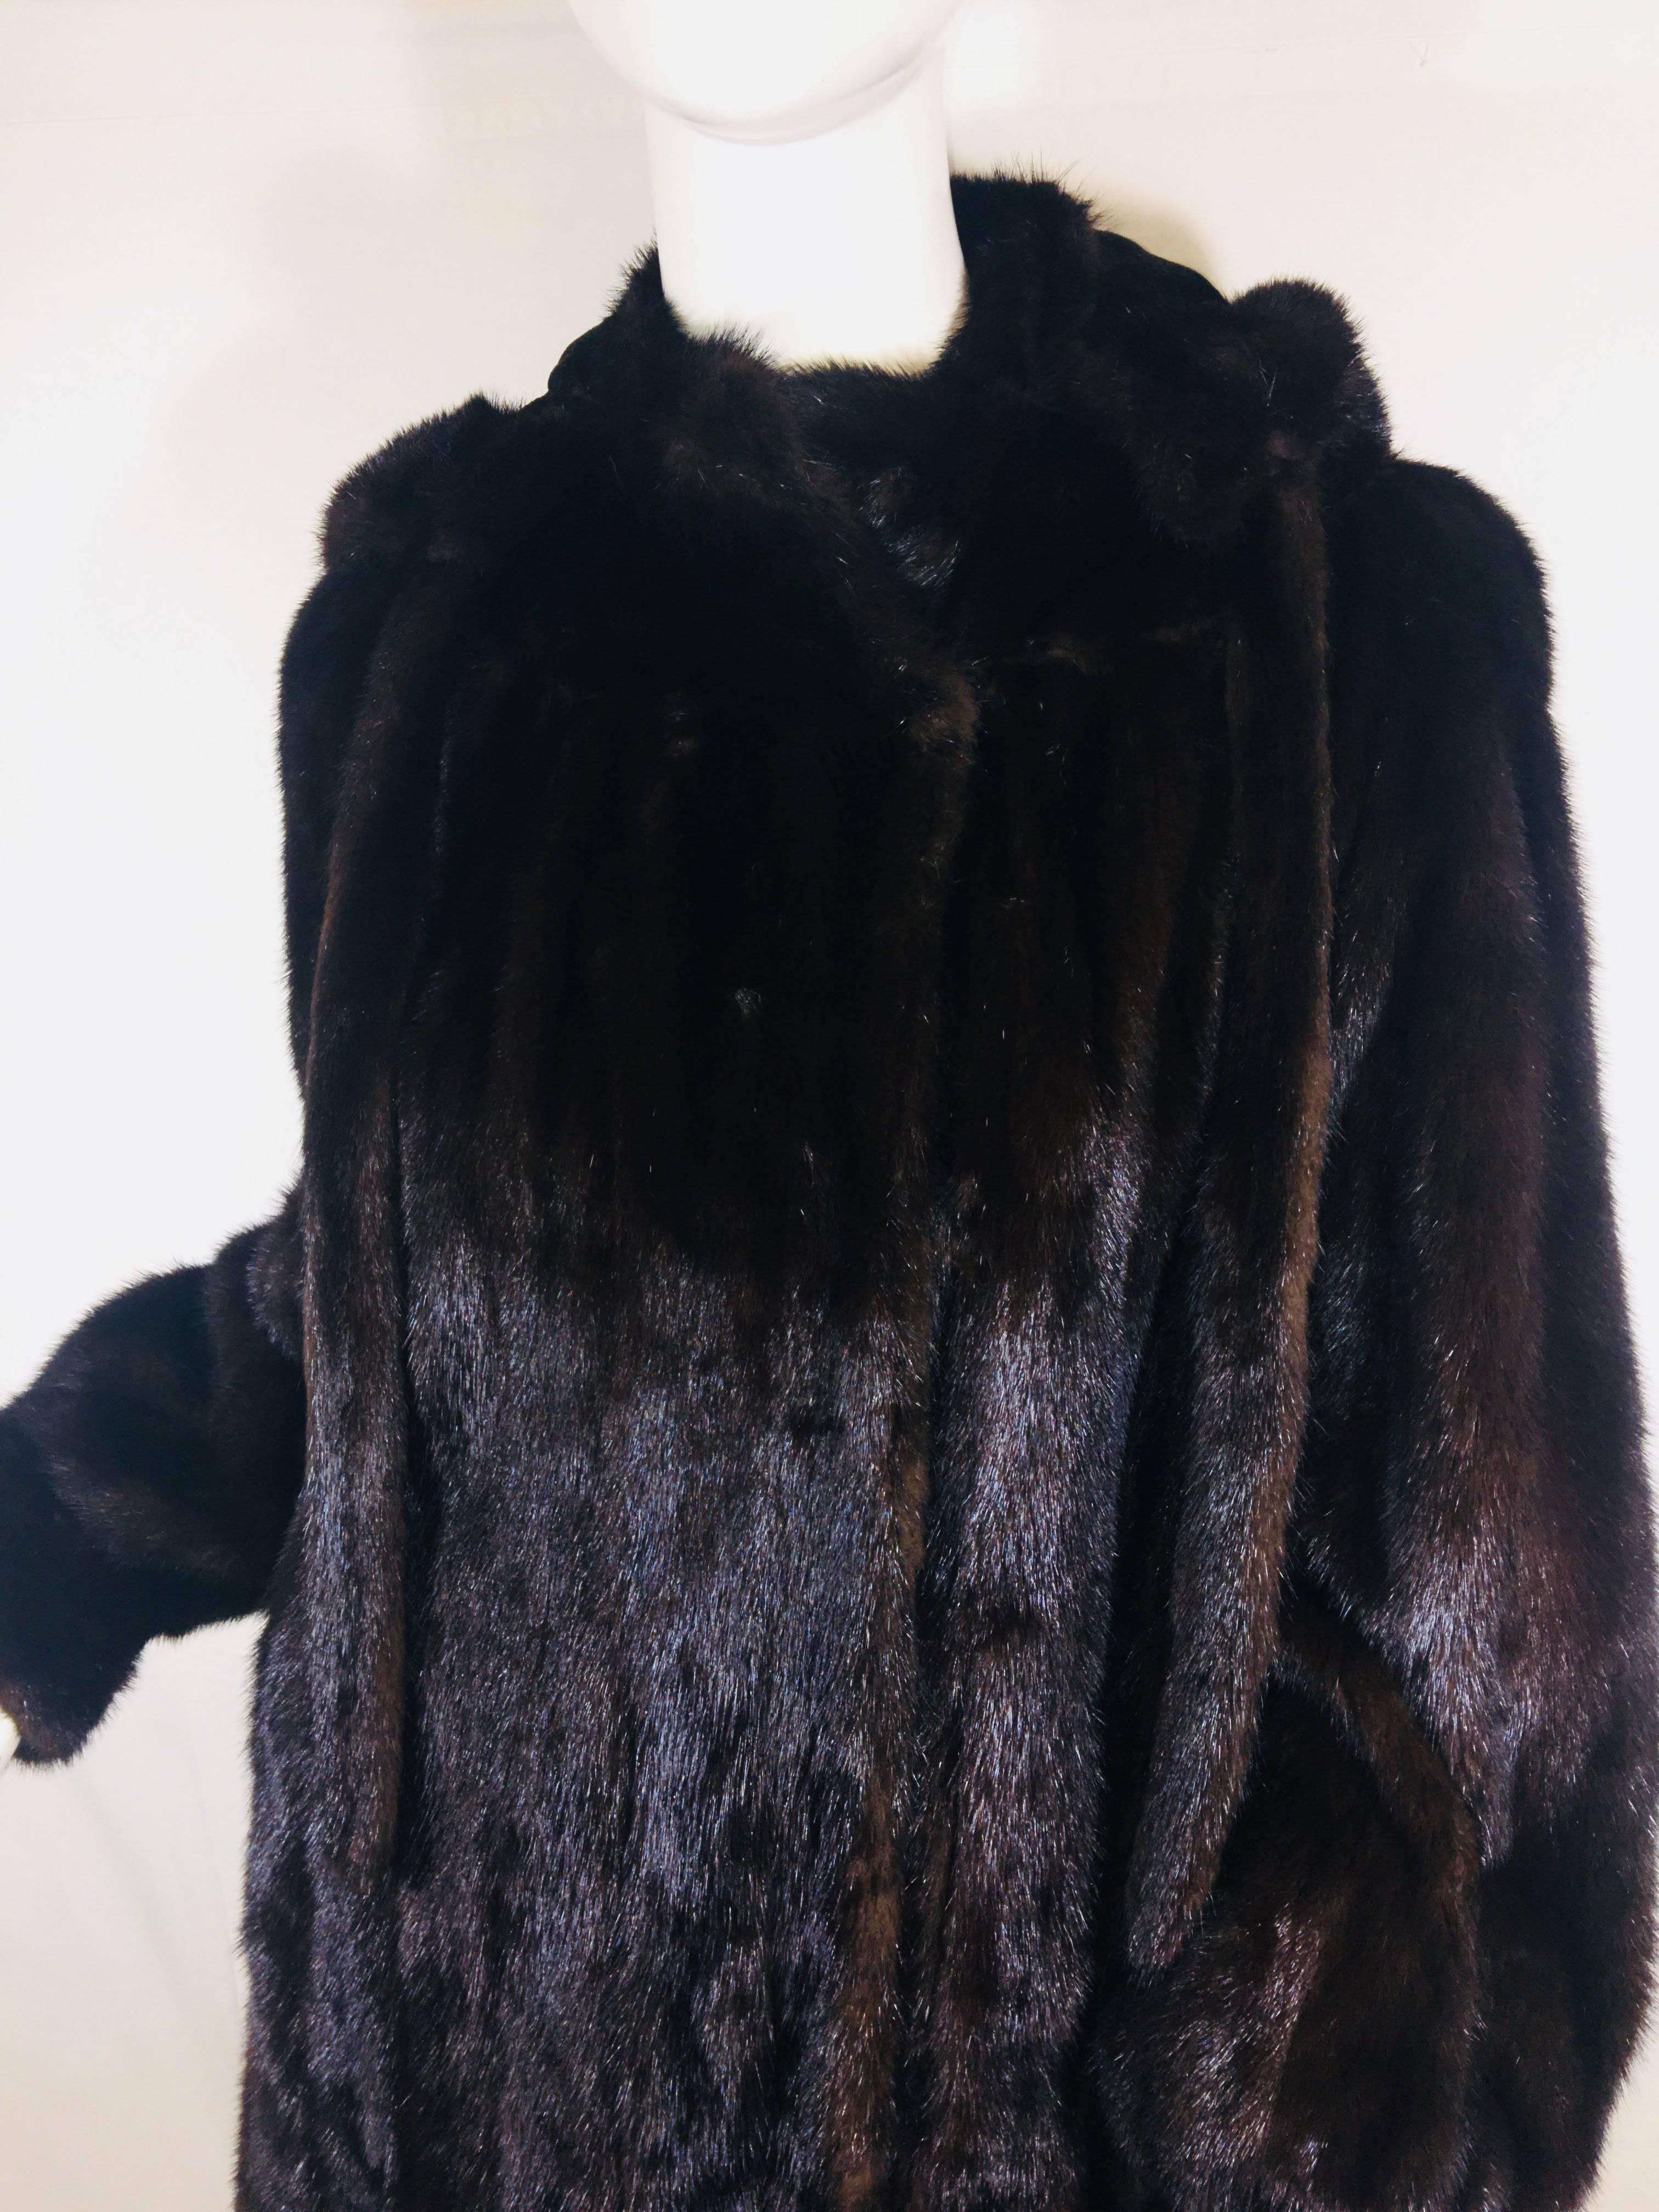 Kahn Bros. and Pinto Full Length Dark Brown Mink Fur Coat with Hood.